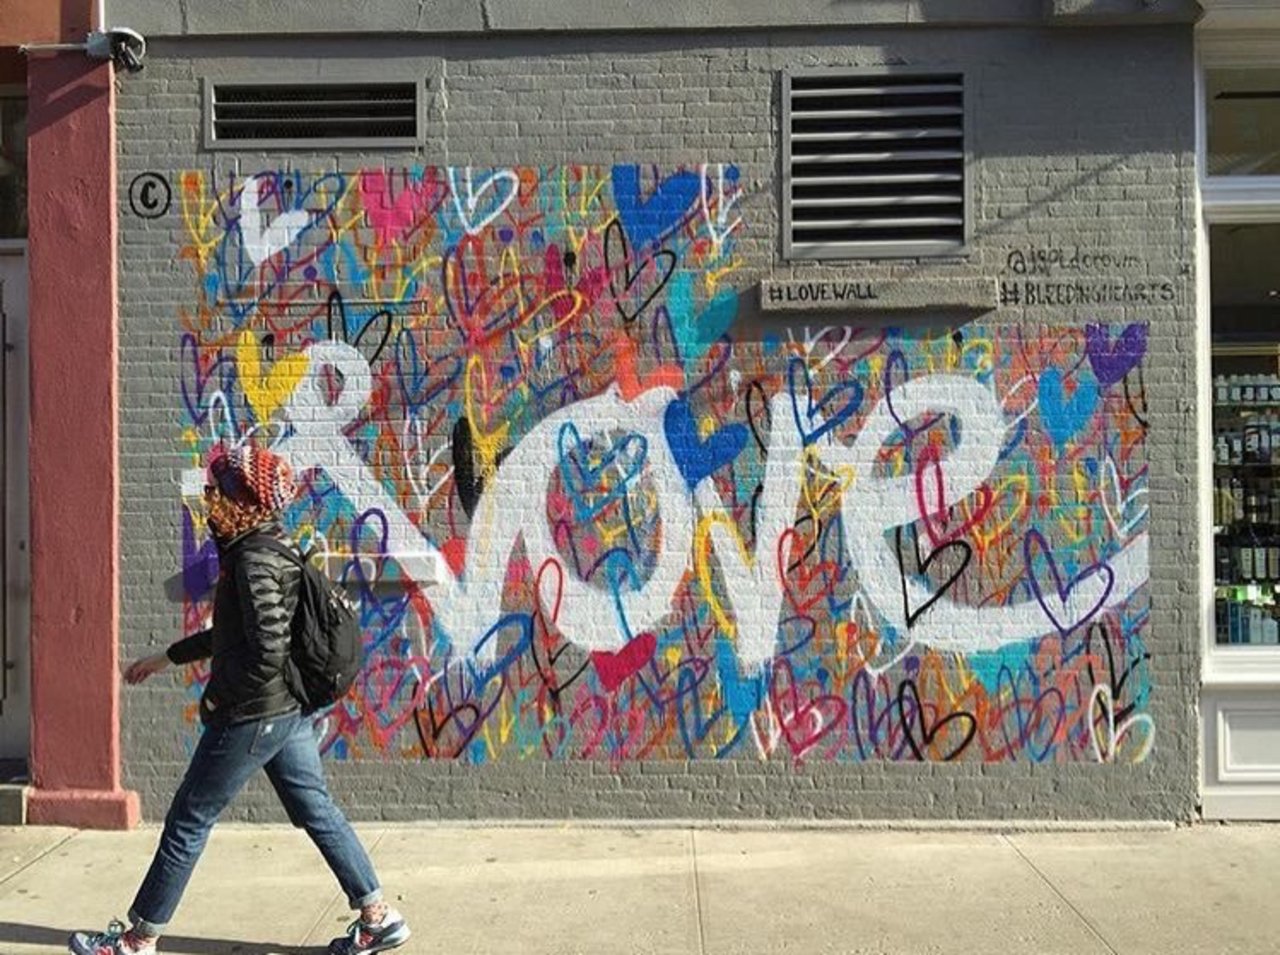 A walk without seeing love#streetart #graffiti #streetphotography https://t.co/gW0SLHINjo